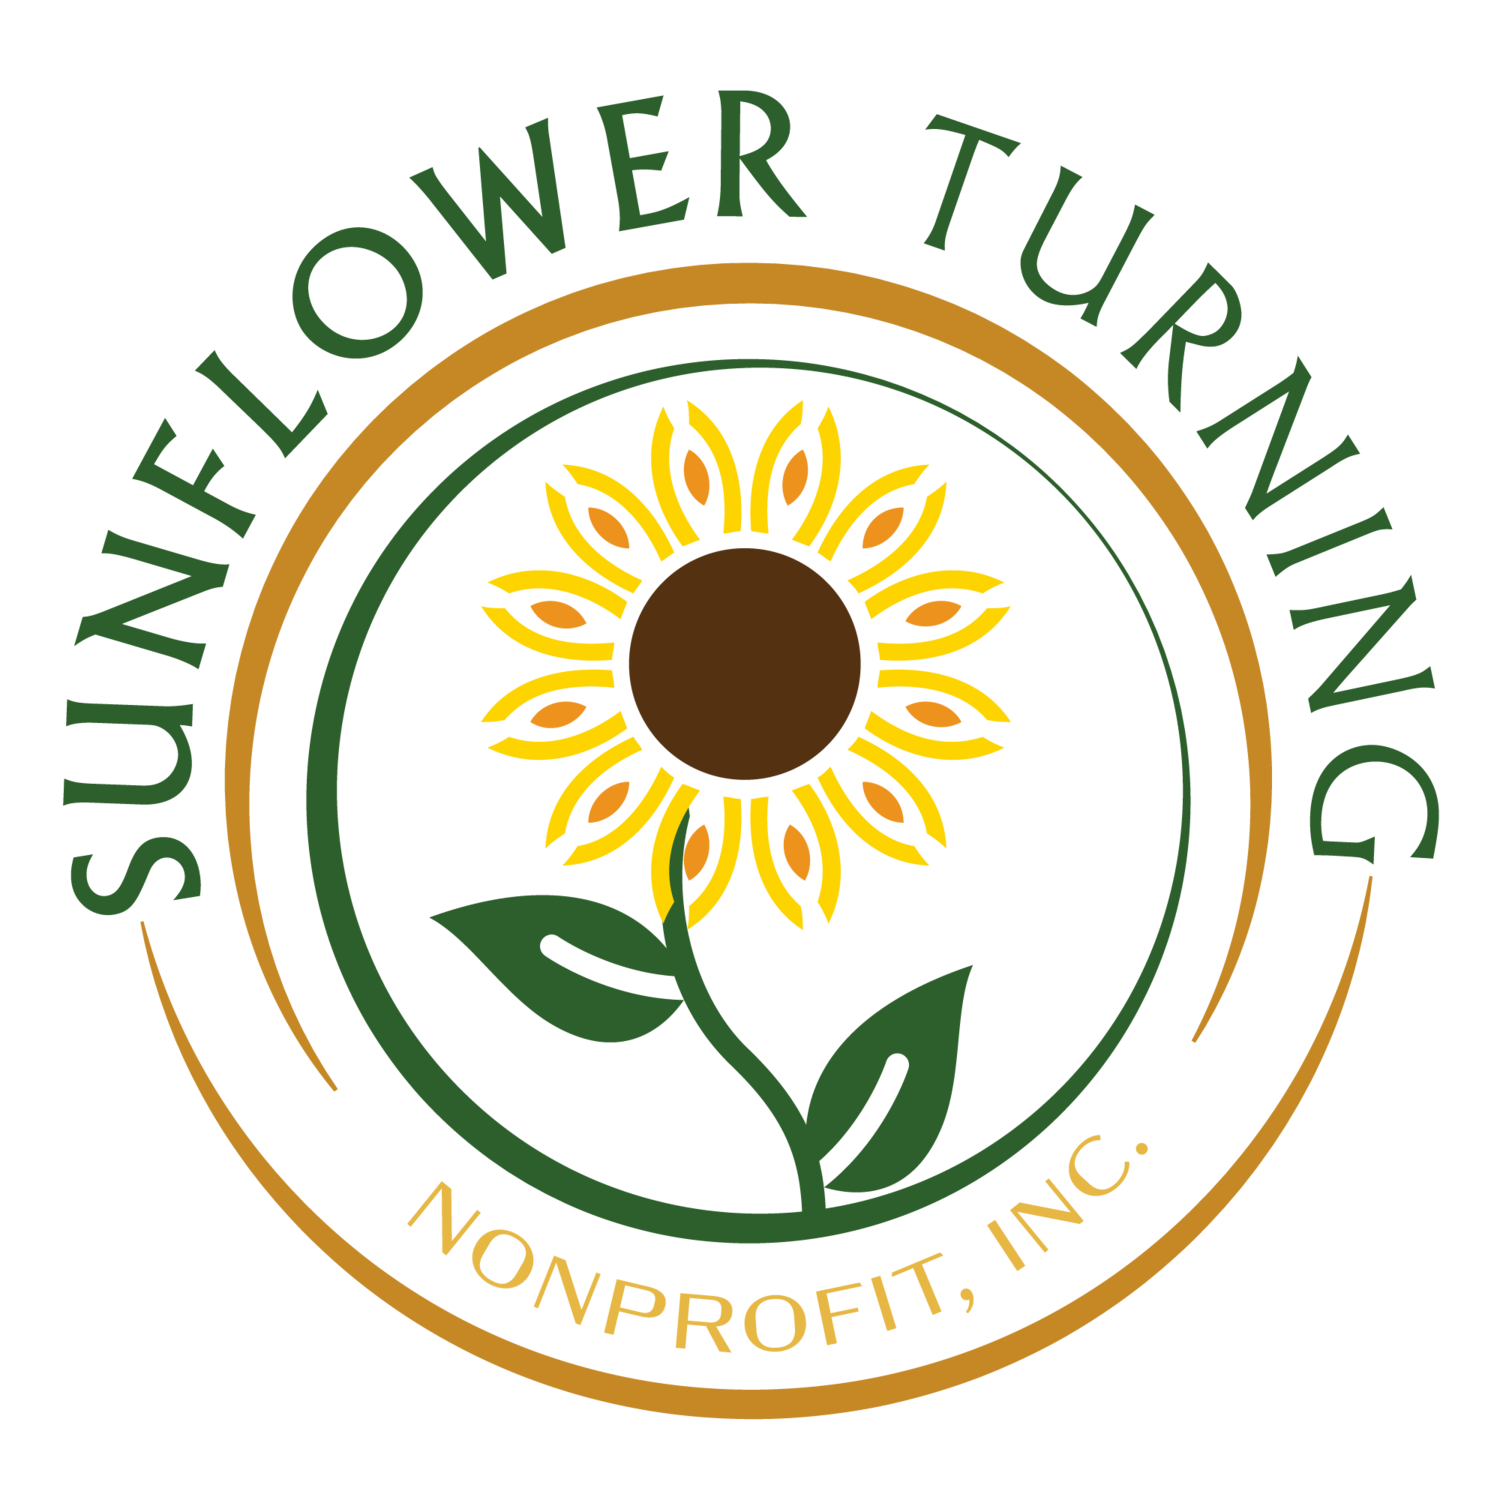 Sunflower Turning